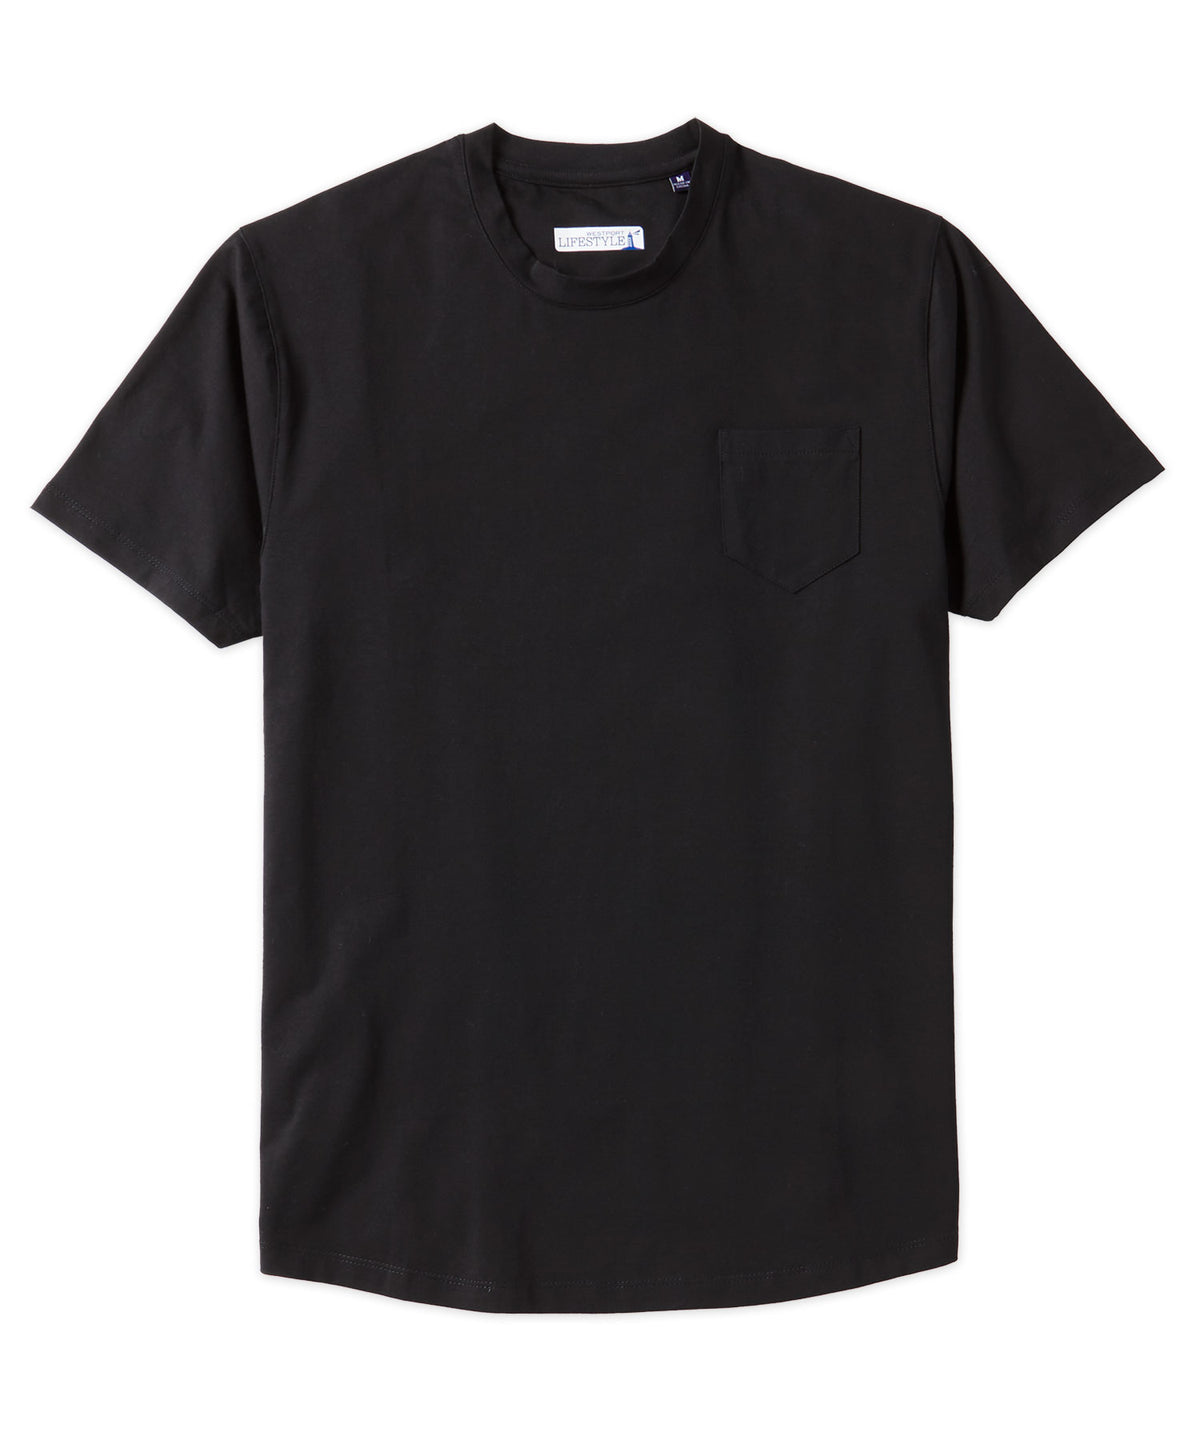 Westport Lifestyle Ridgefield Pocket T-Shirt